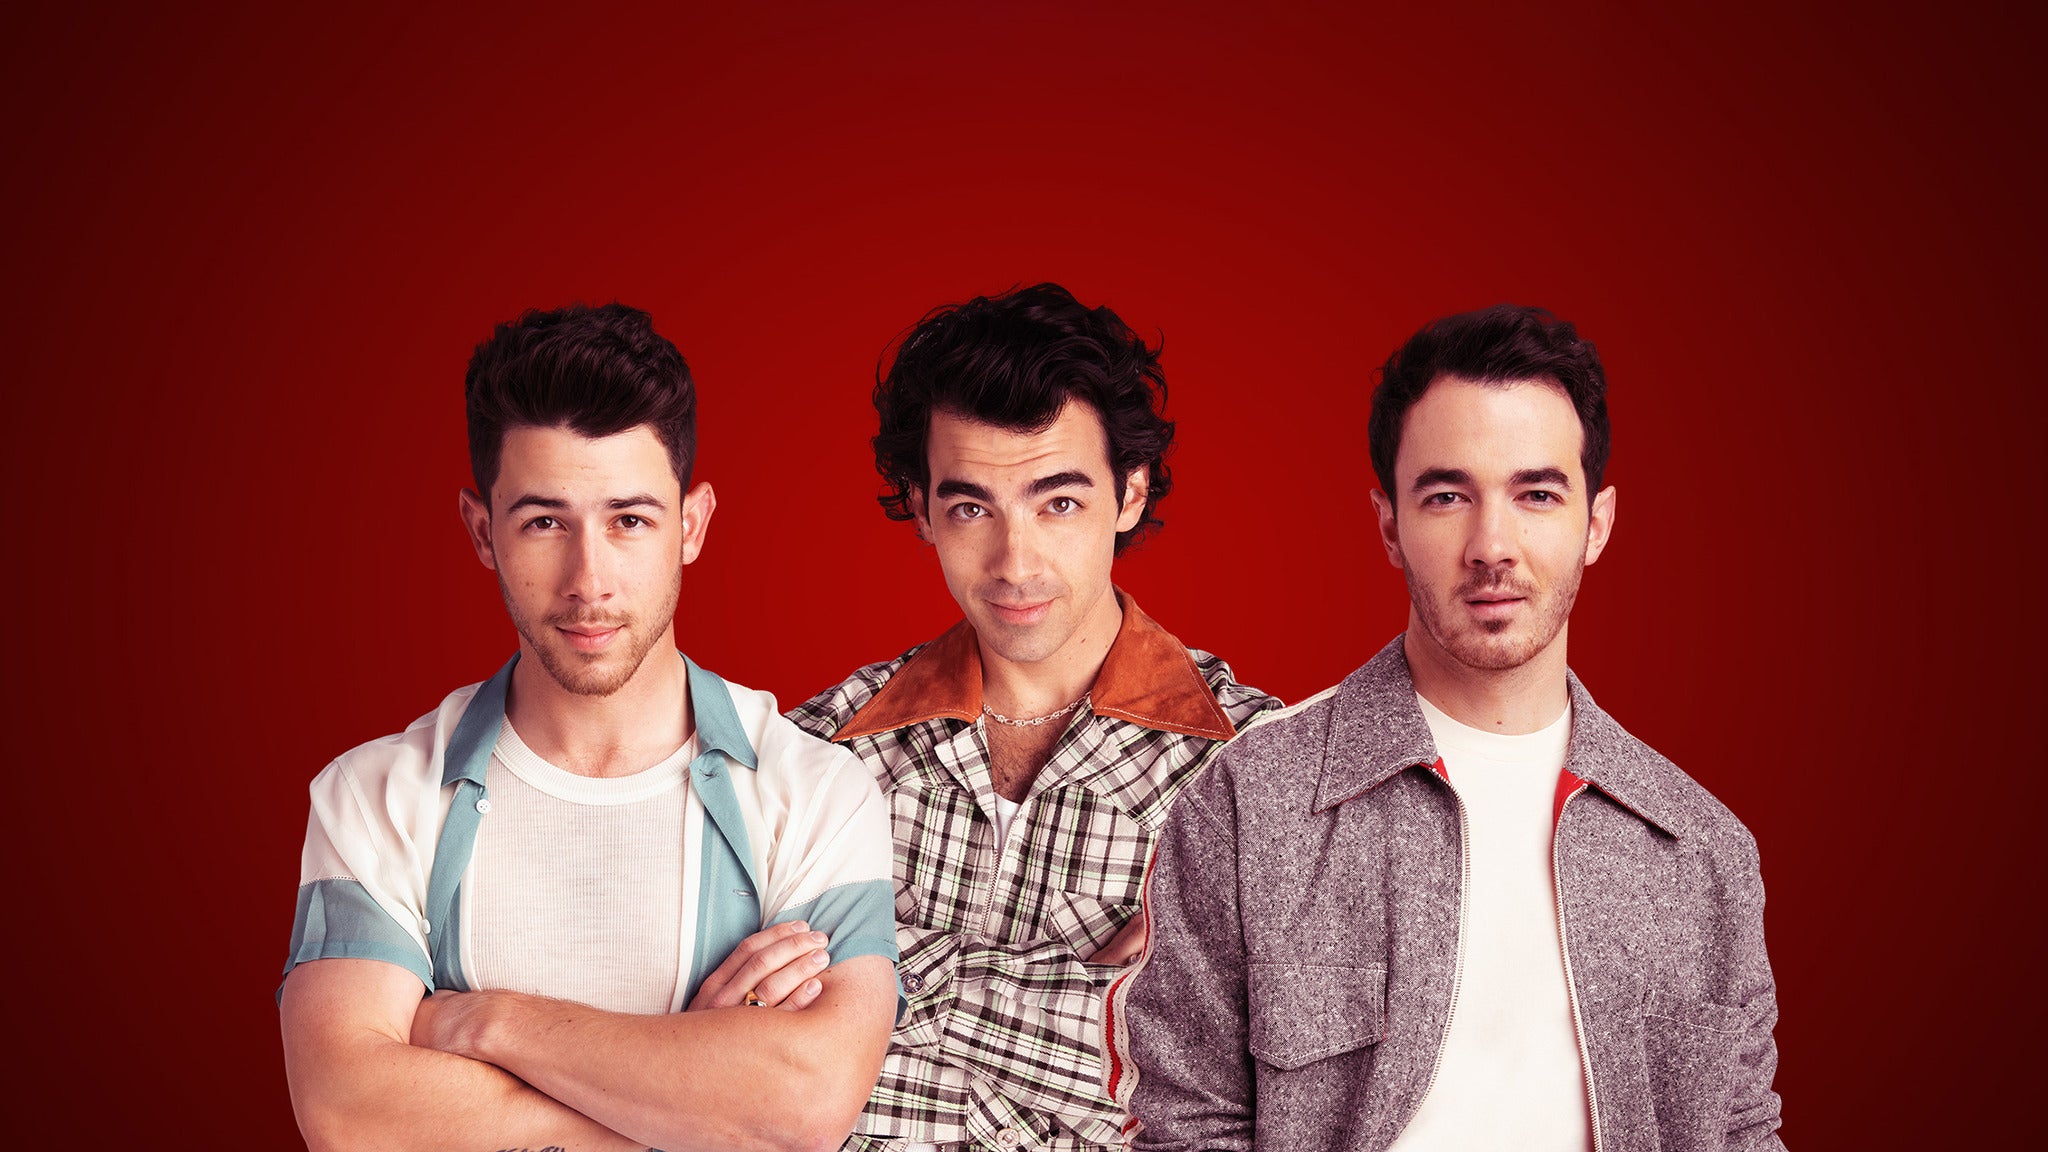 Jonas Brothers: Live in Las Vegas in Las Vegas promo photo for Fan presale offer code